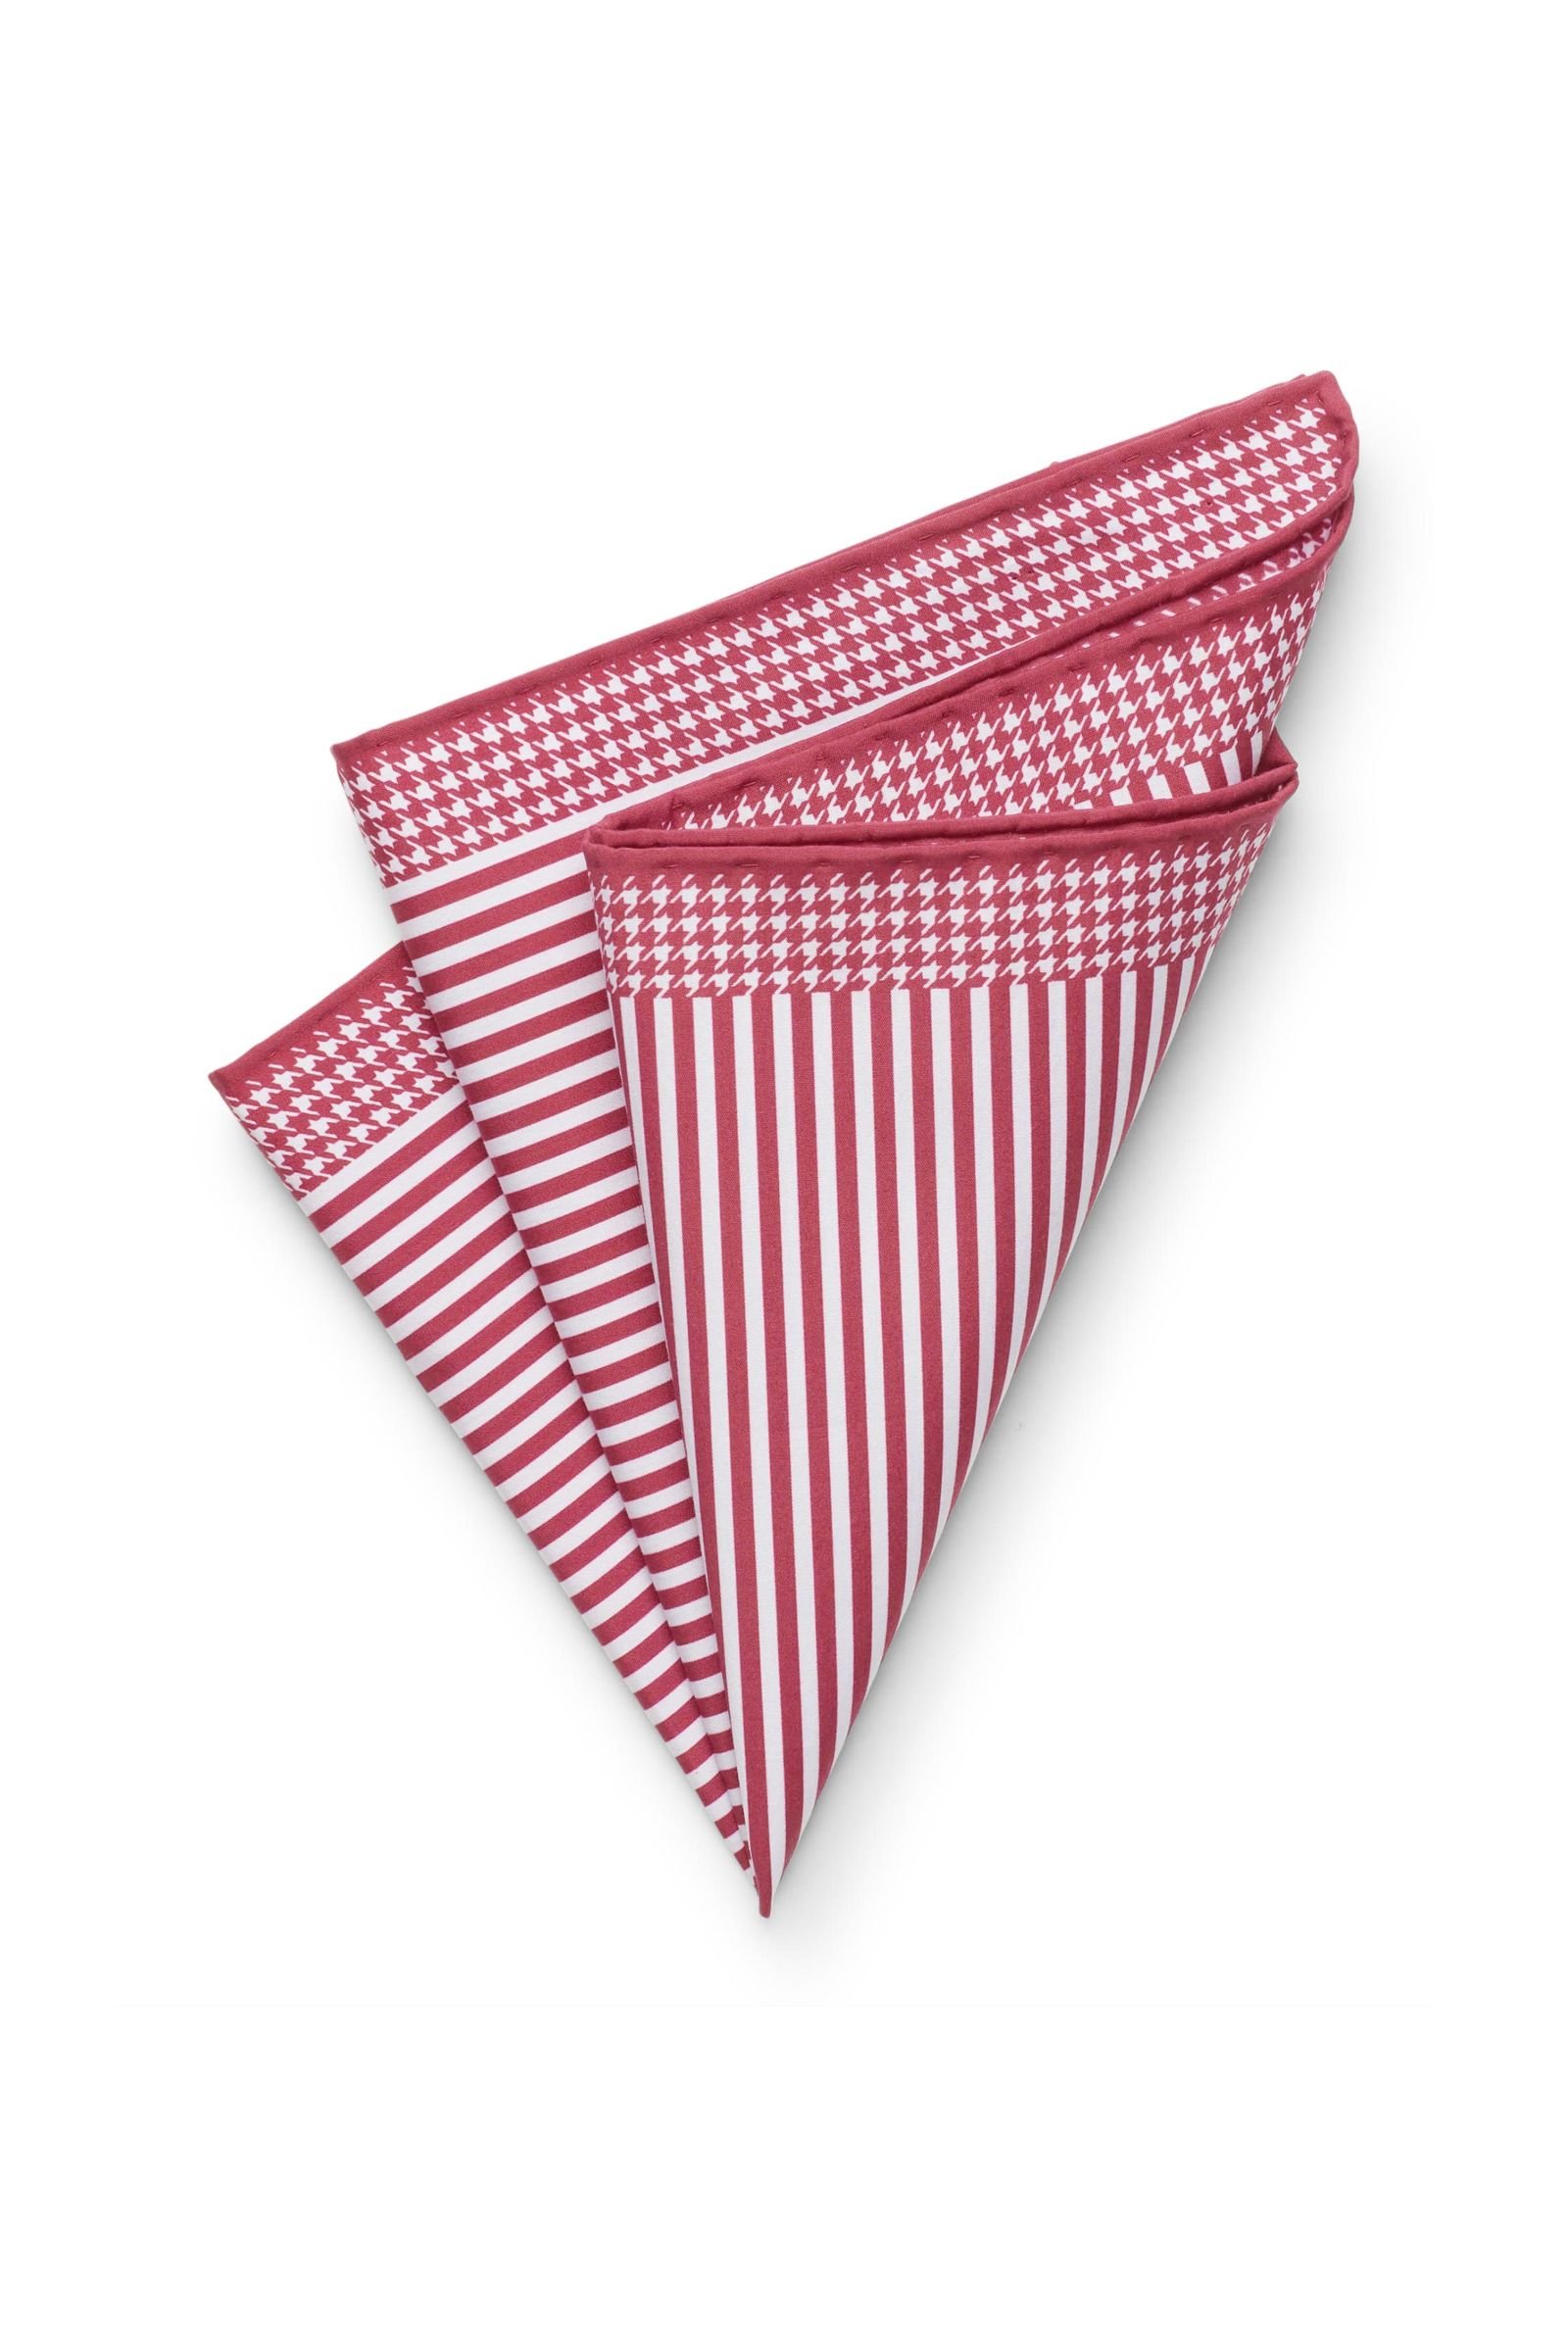 Pocket square dark red/white striped